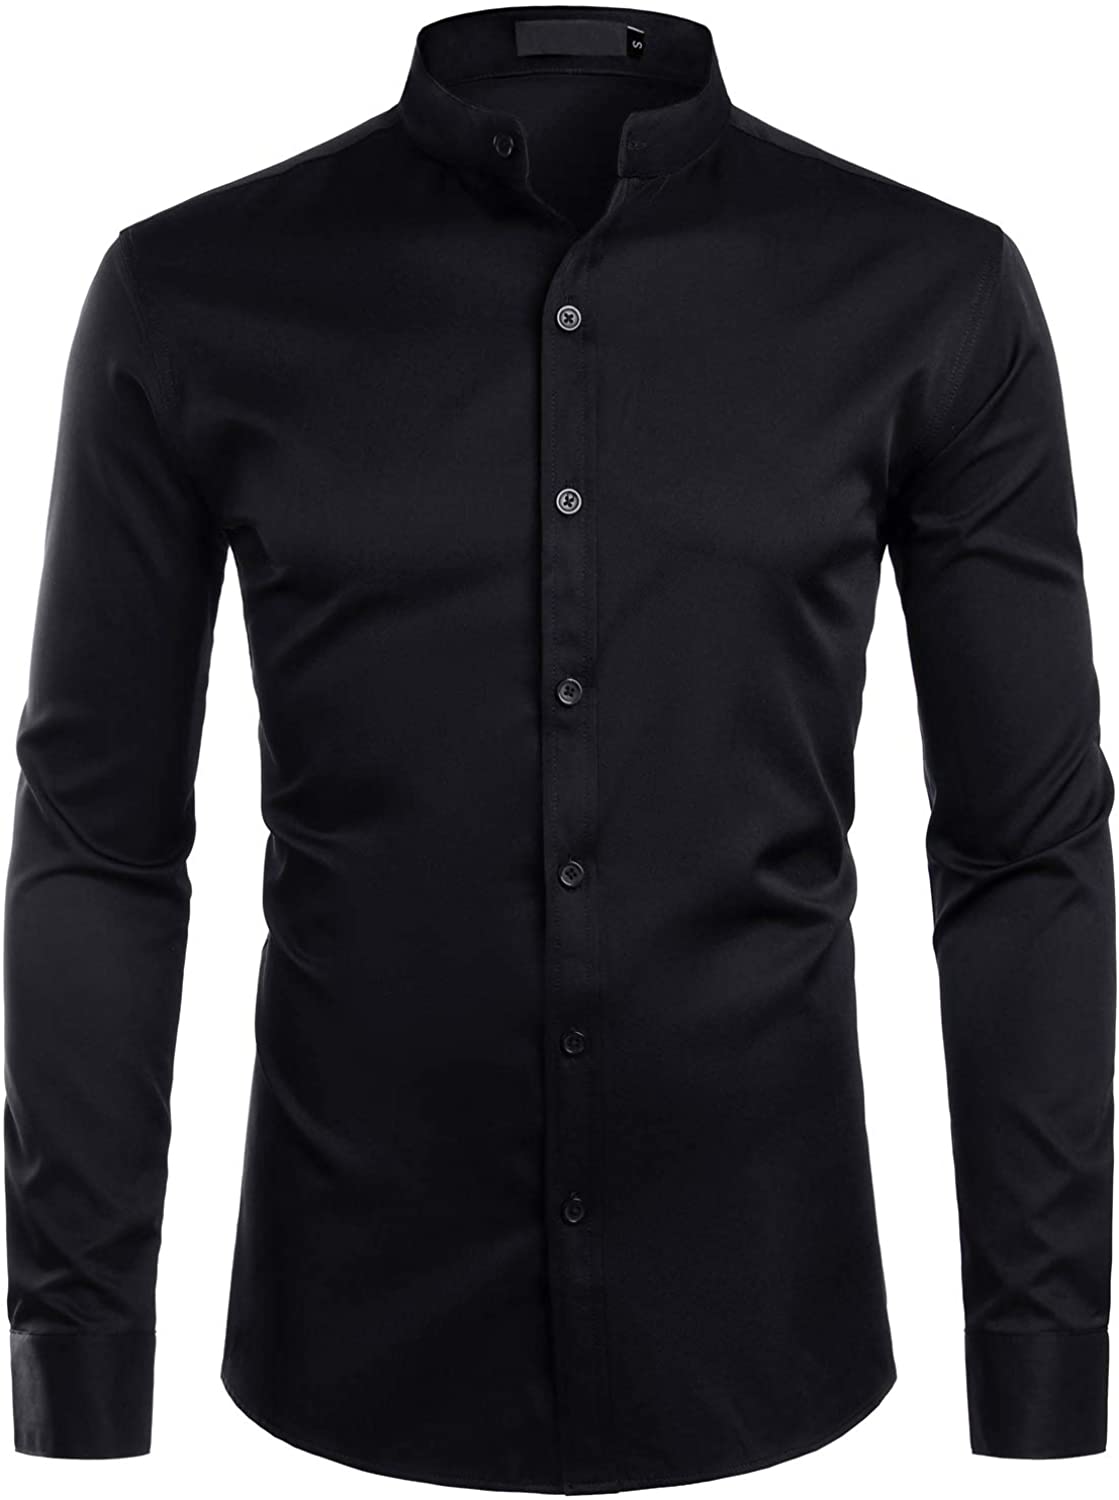 Black Zipper Shirt with Classic Collar